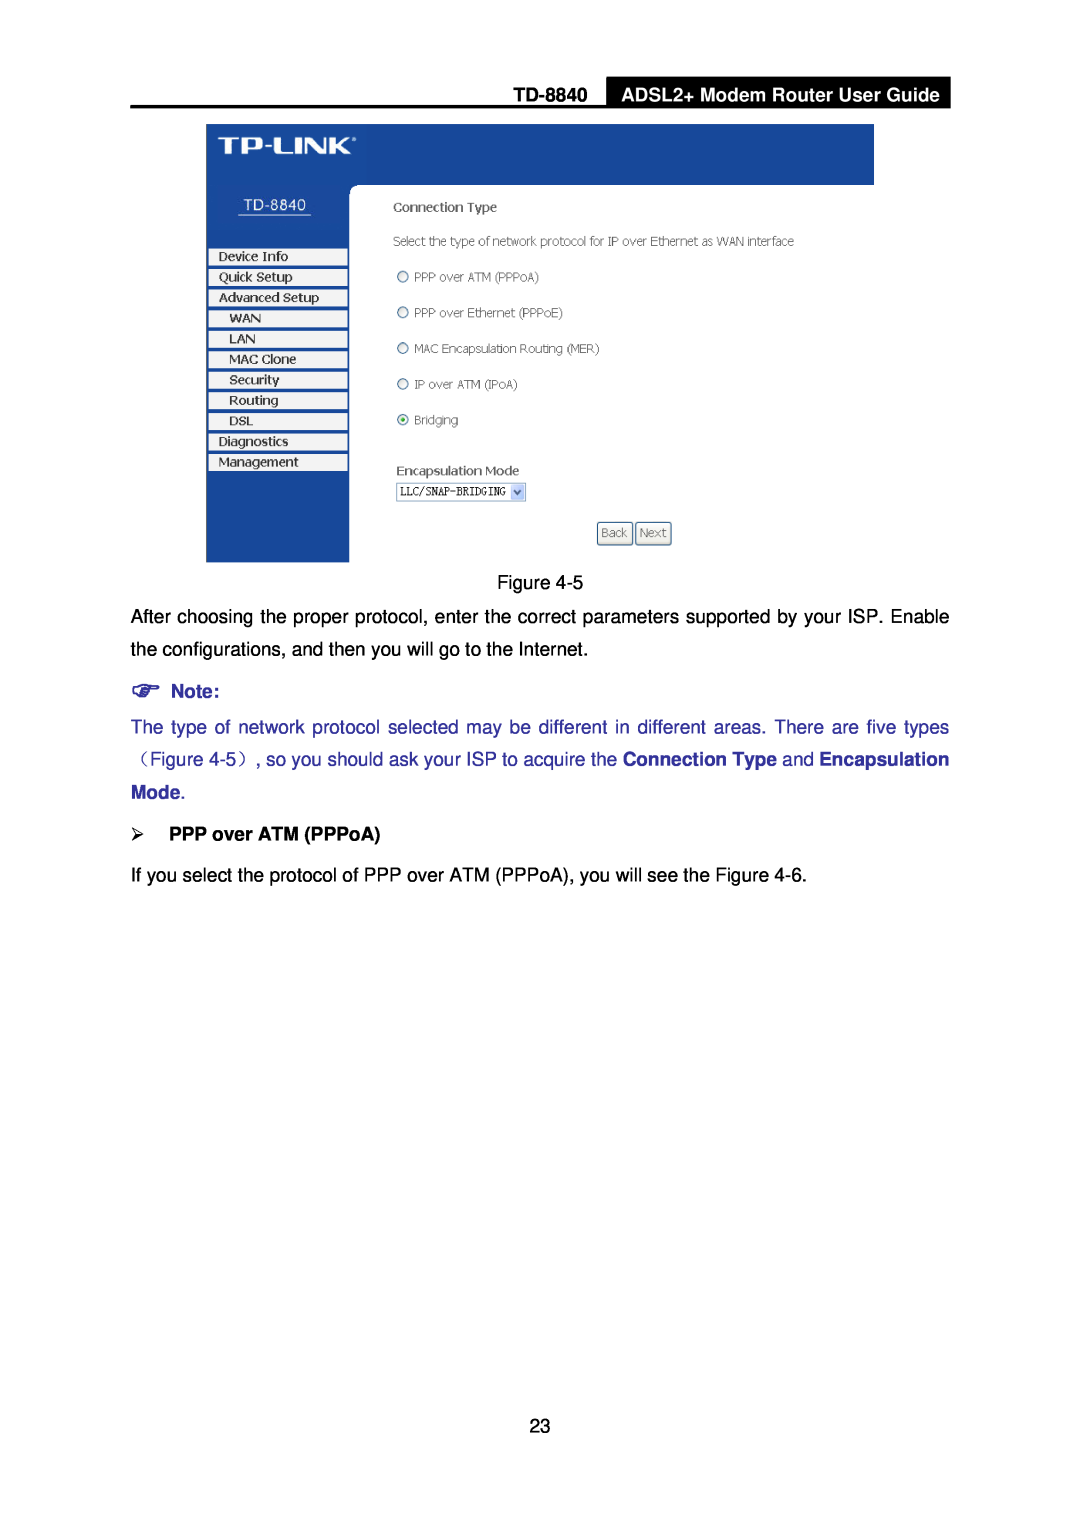 TP-Link TD-8840 manual ADSL2+ Modem Router User Guide, ¾PPP over ATM PPPoA 